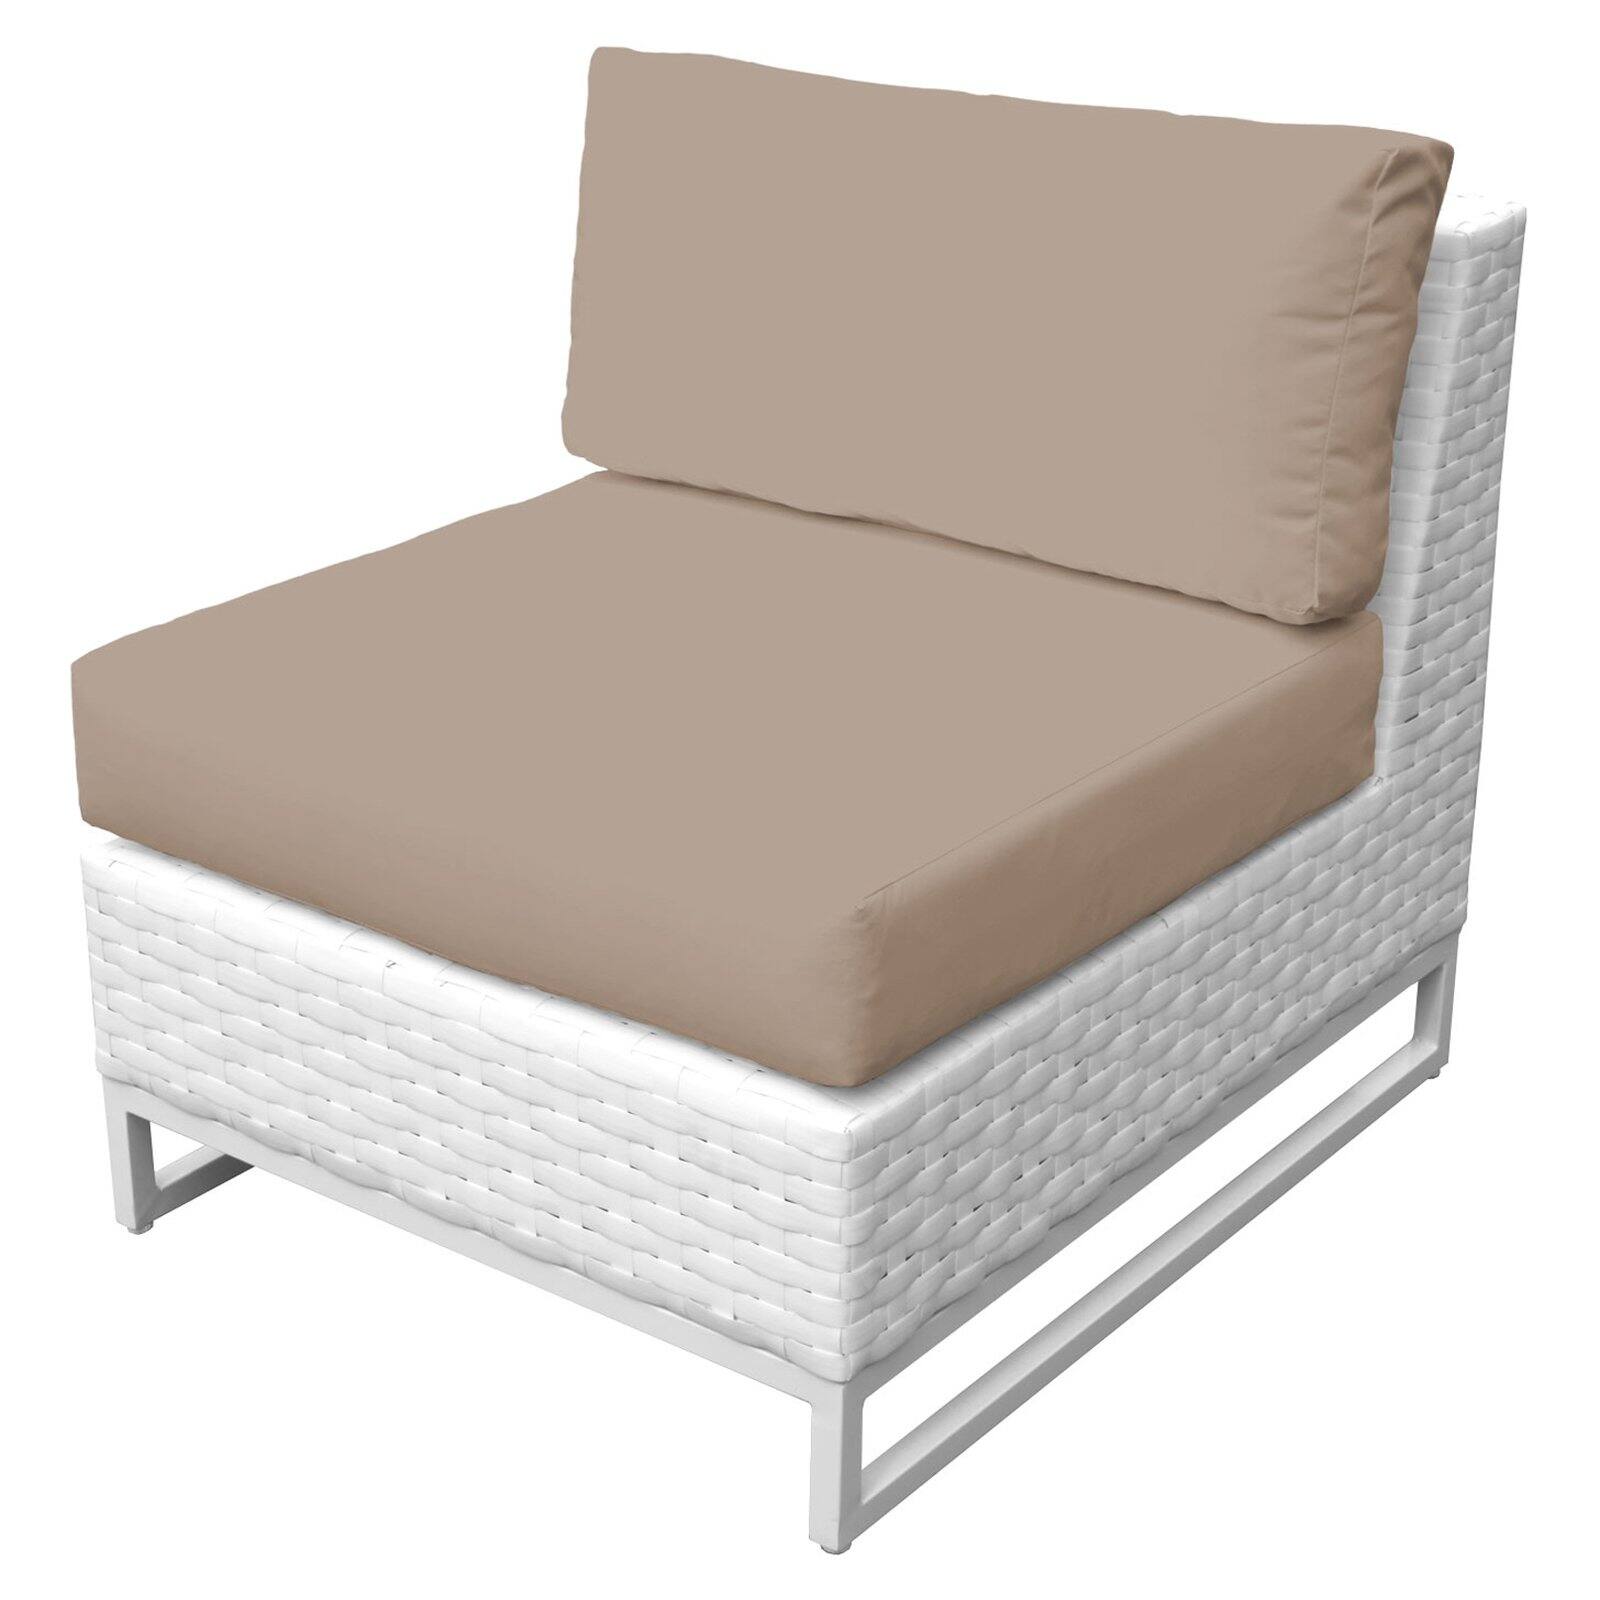 TK Classics TKC047b-AS Miami Seating Outdoor Furniture, Sail White - image 2 of 2